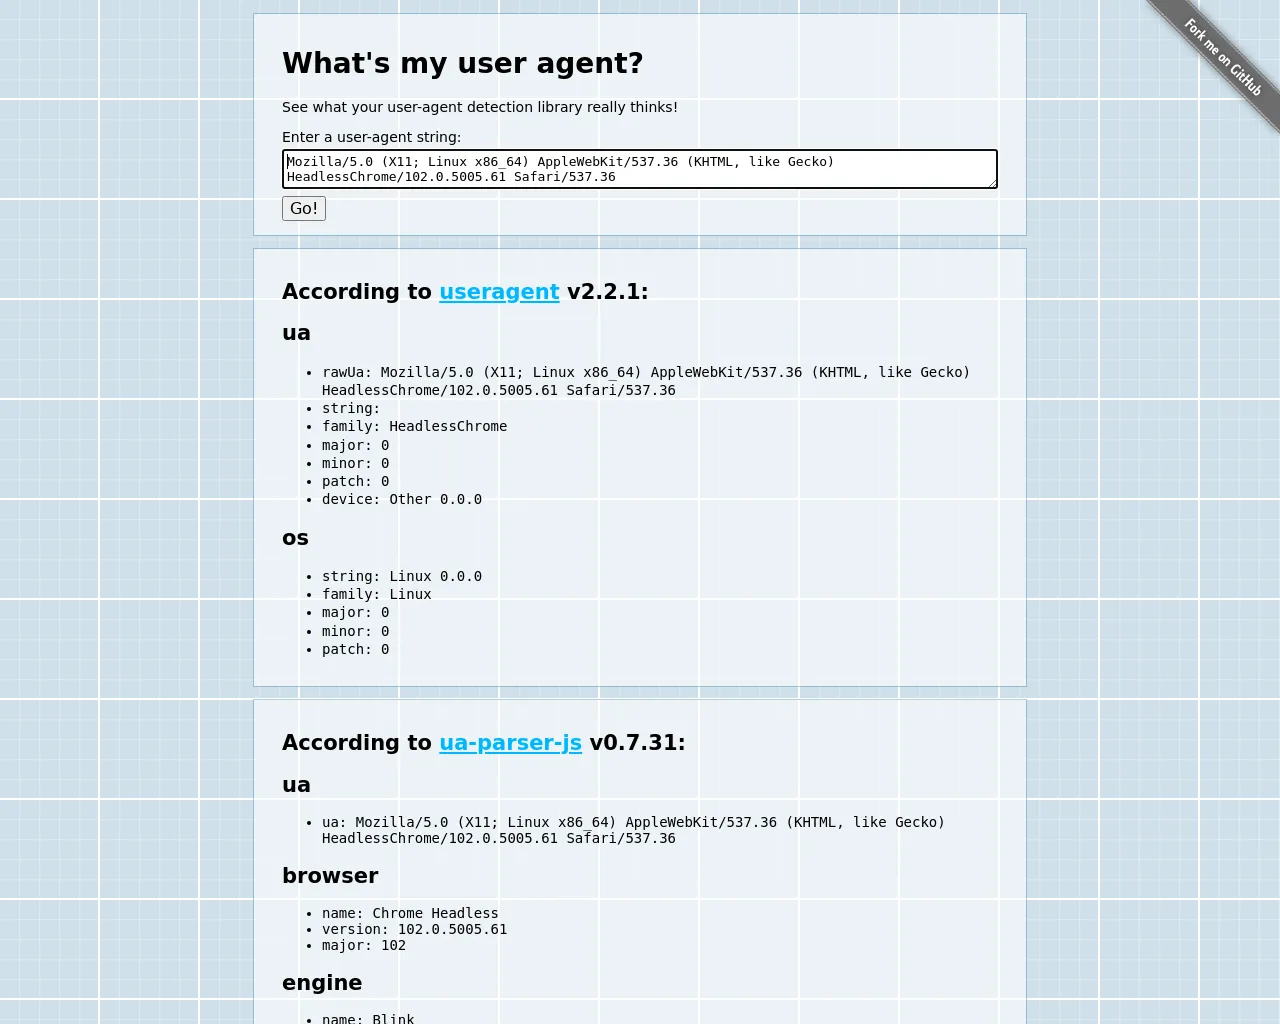 A screenshot with default user agent by screenshot
API